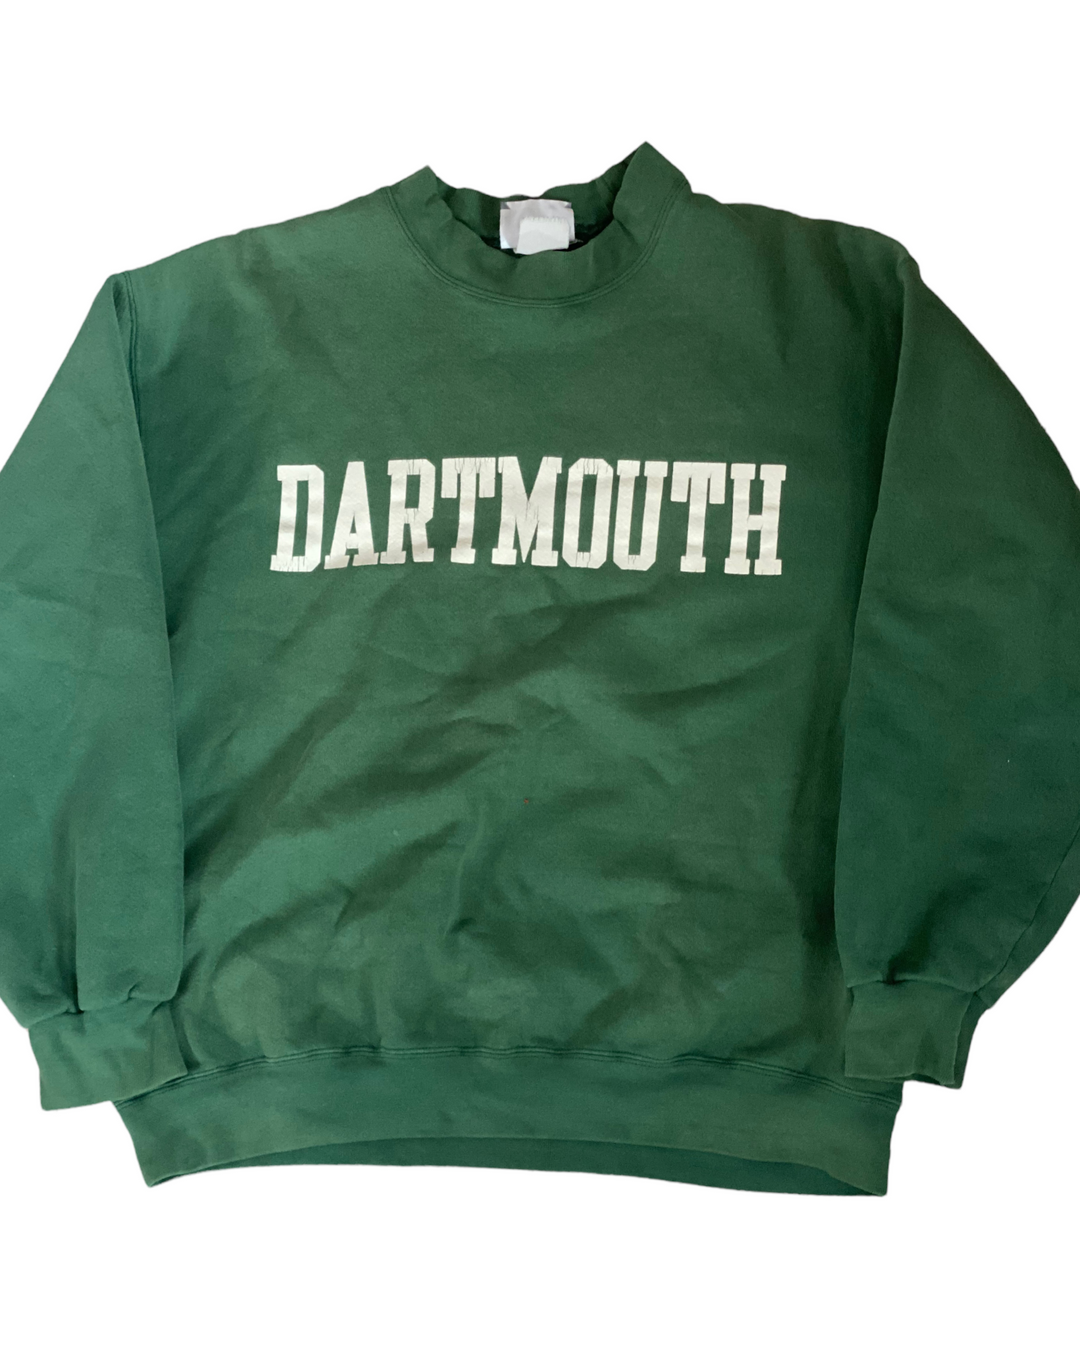 Dartmouth Vintage Sweatshirt